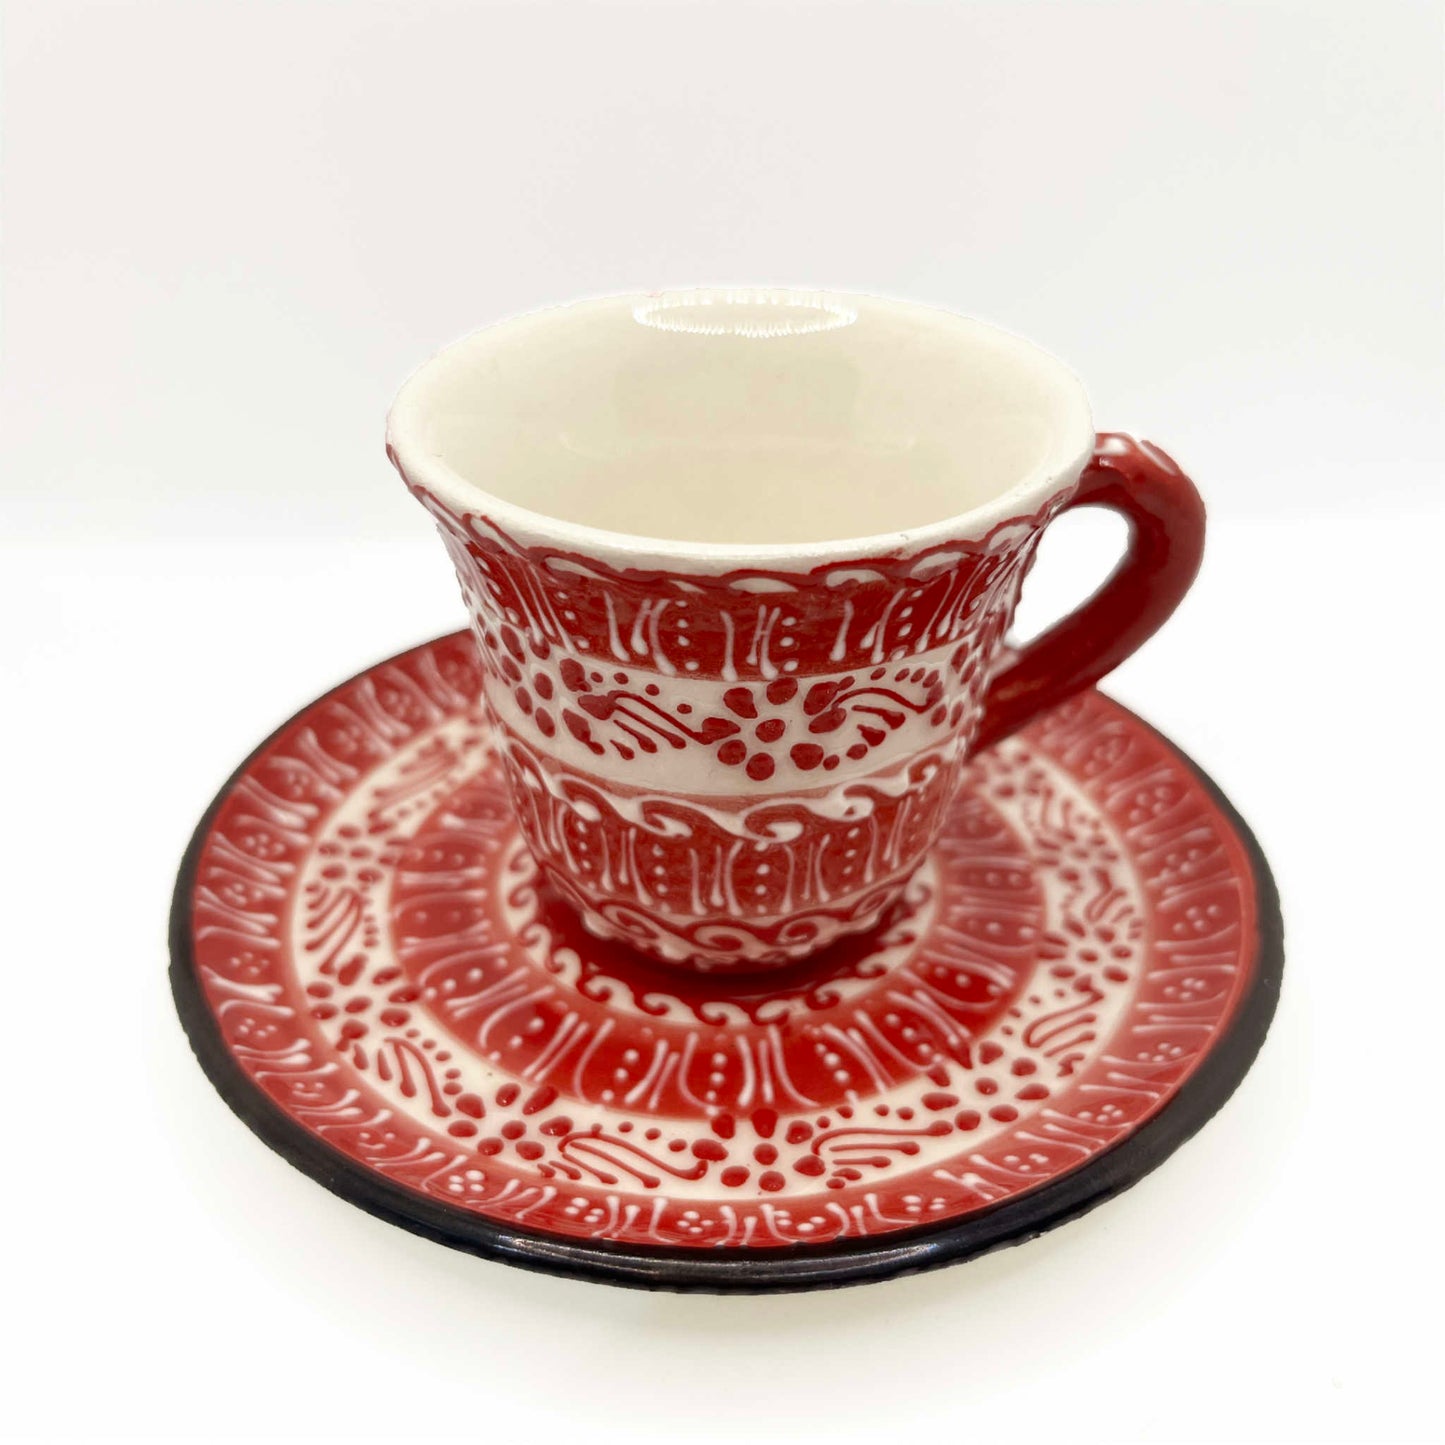 Juego de dos tazas de café cerámica artesanal mesmerise rojo